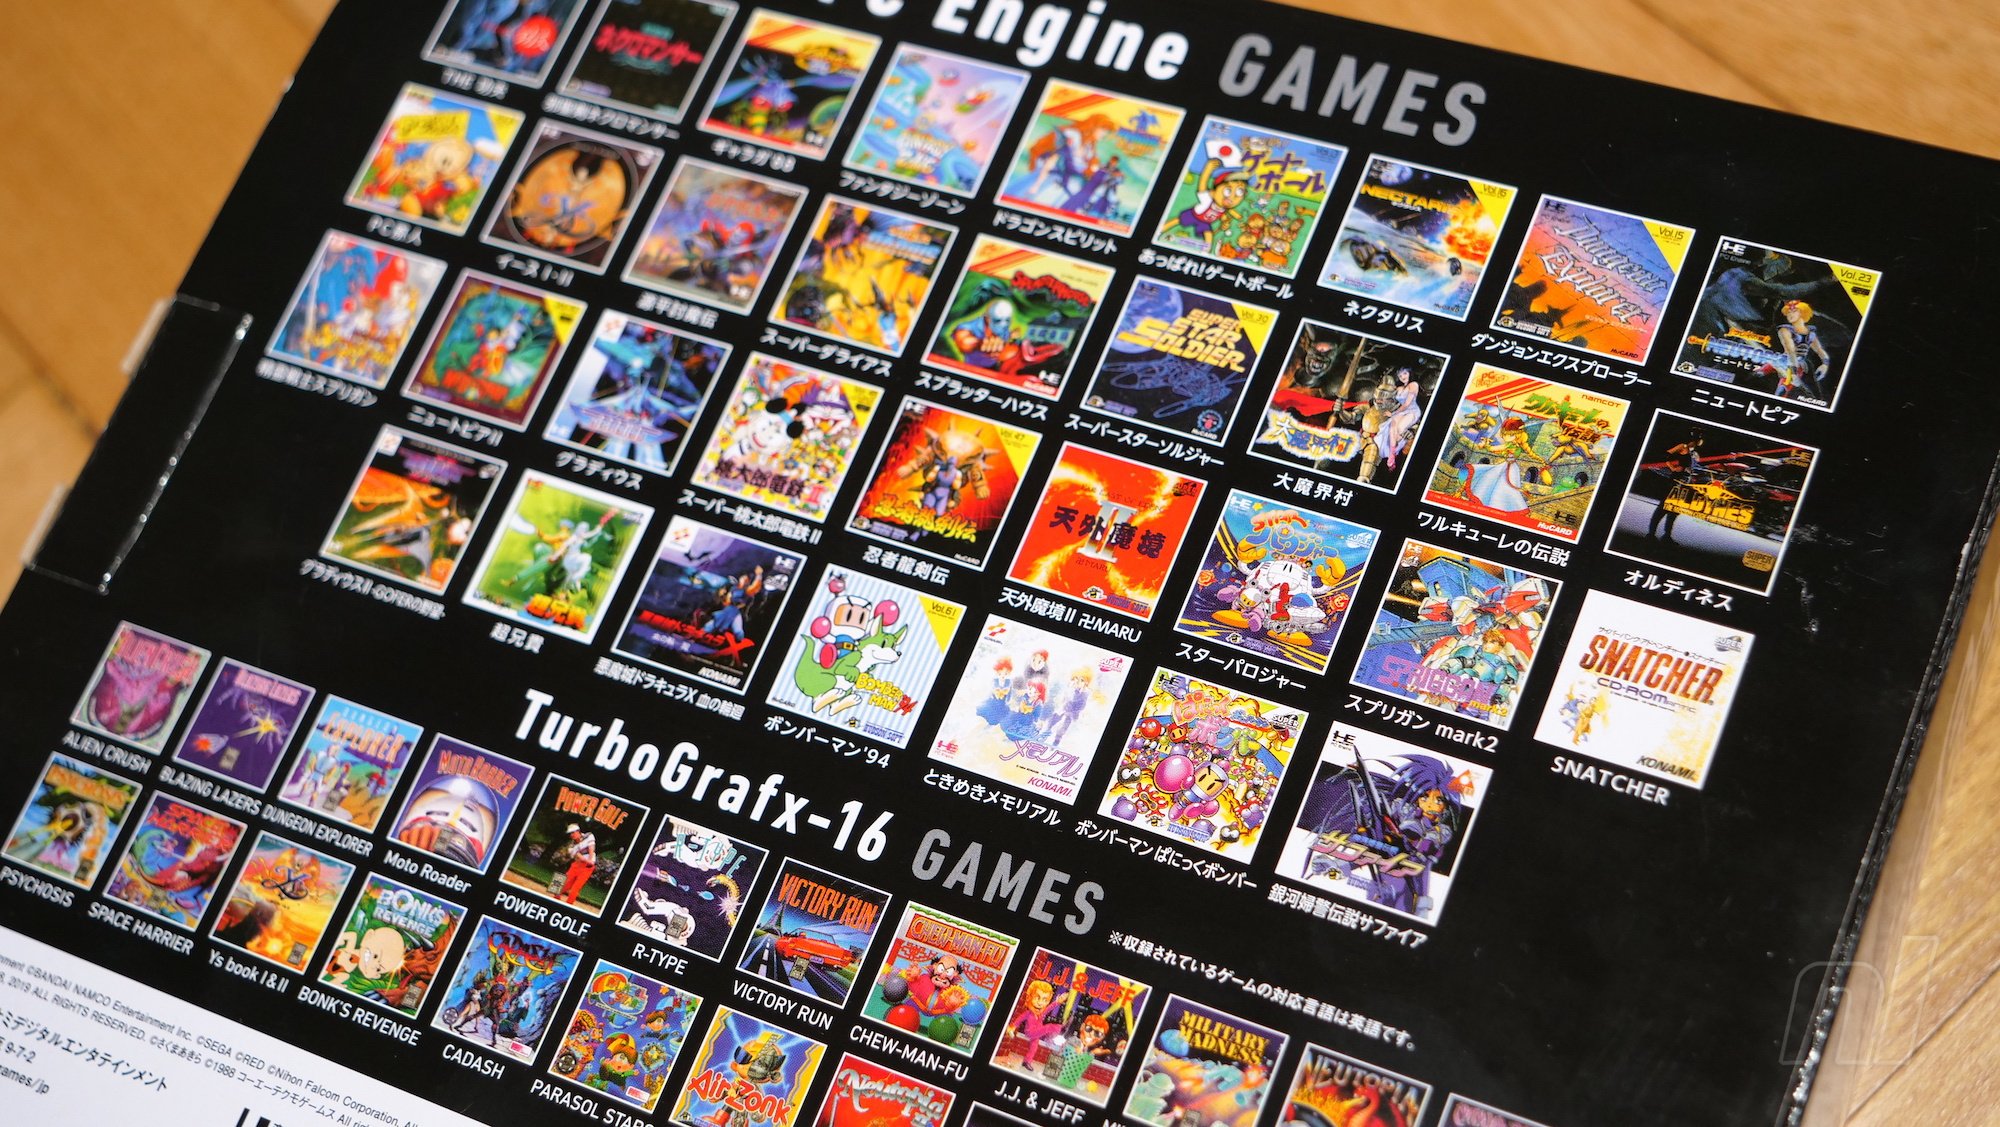 turbografx 16 mini game list